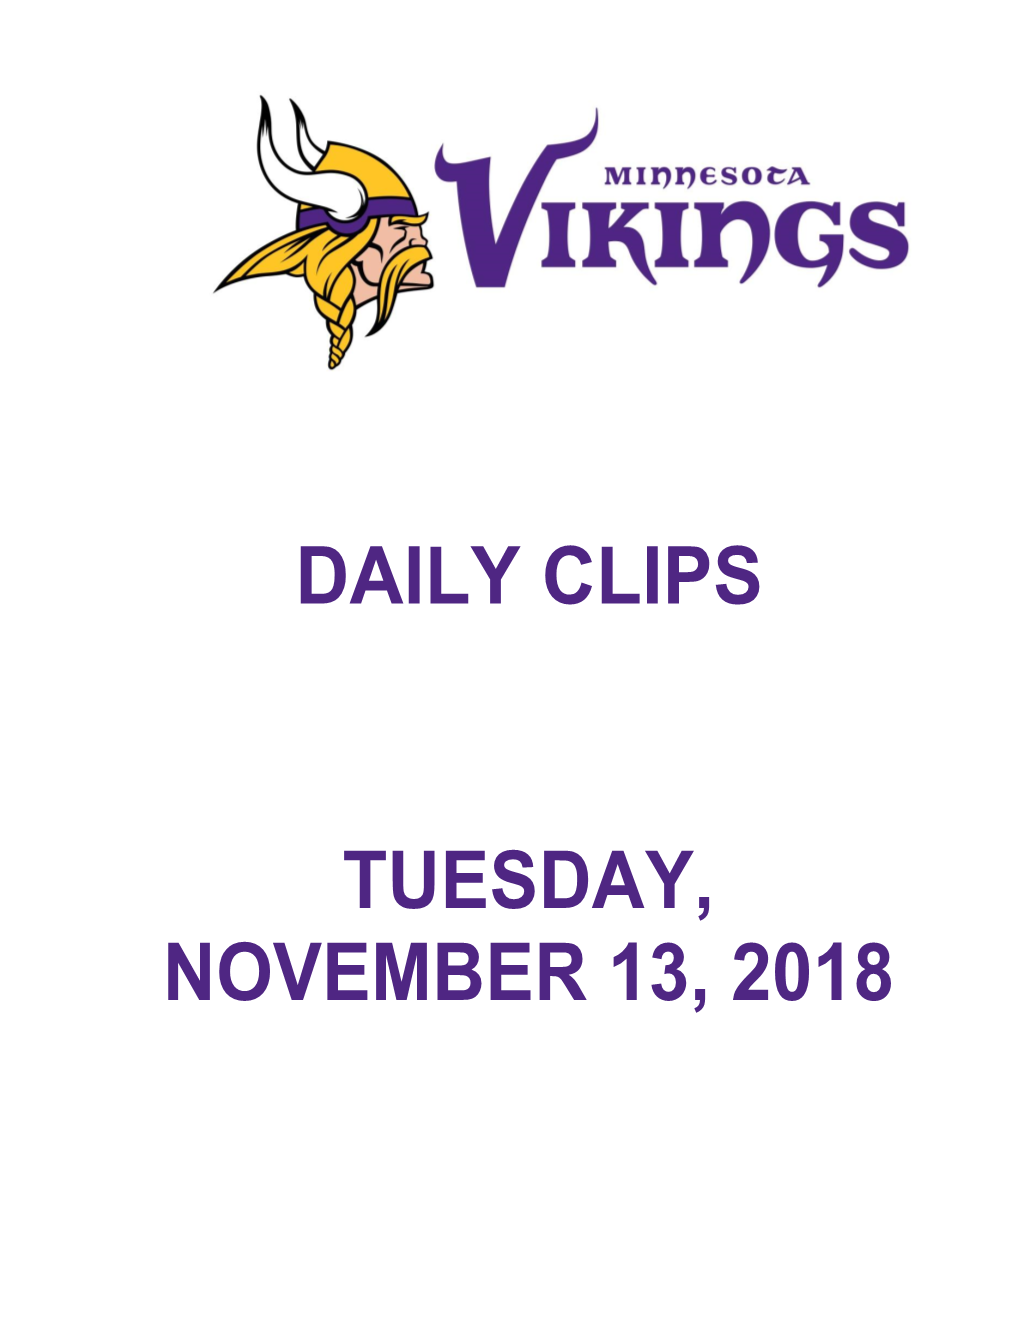 Daily Clips Tuesday, November 13, 2018